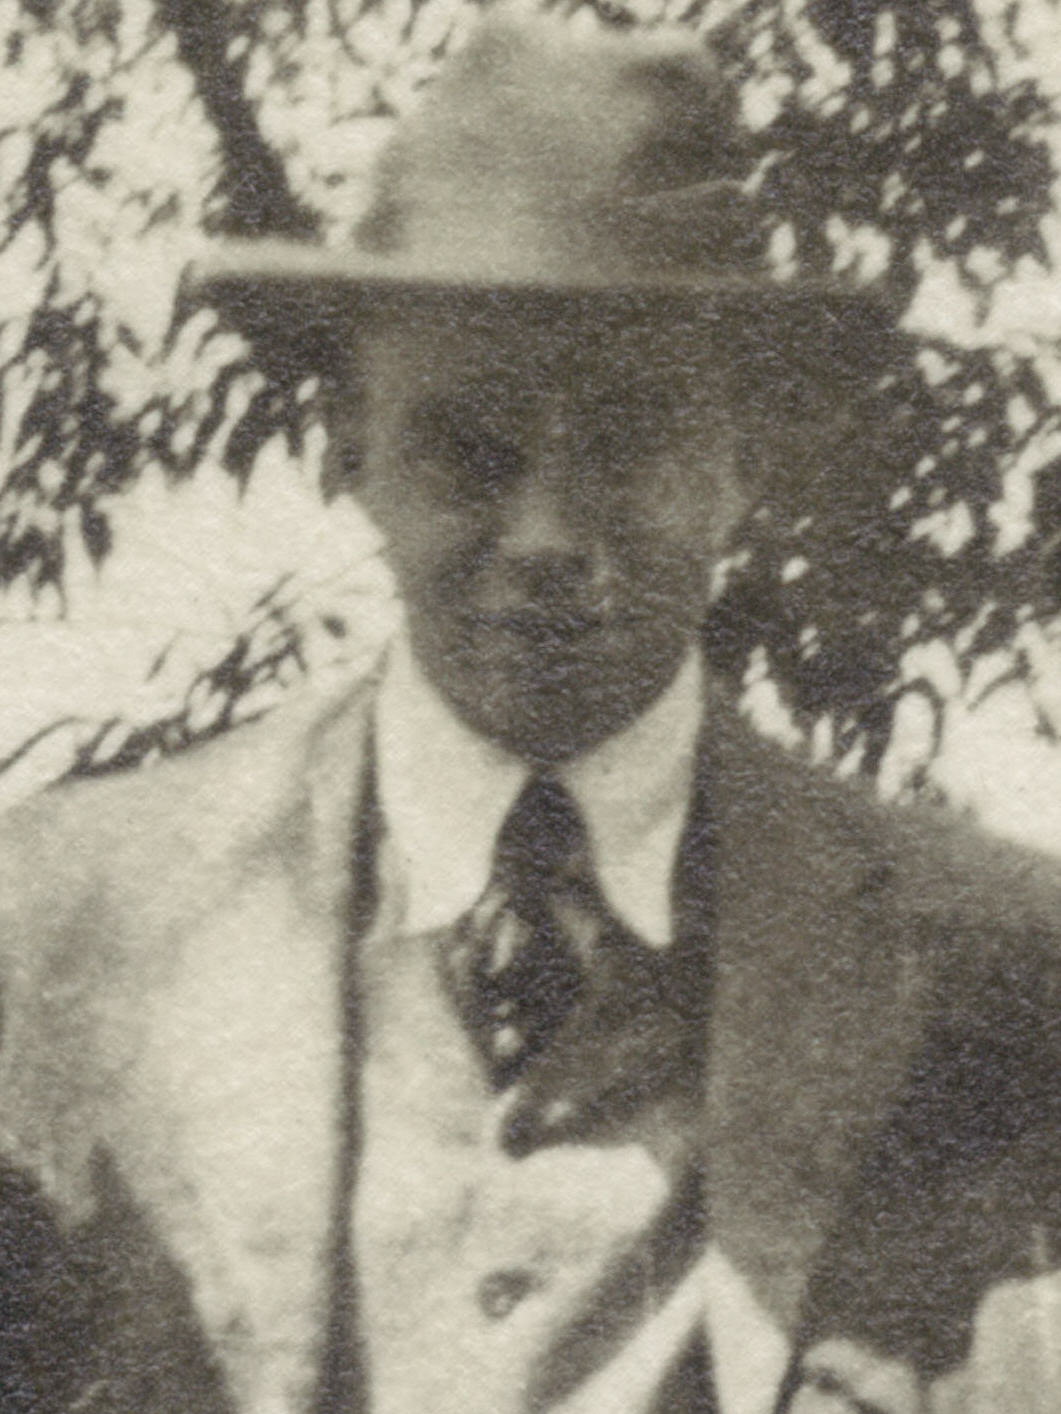 John H. Poehlman, circa 1916